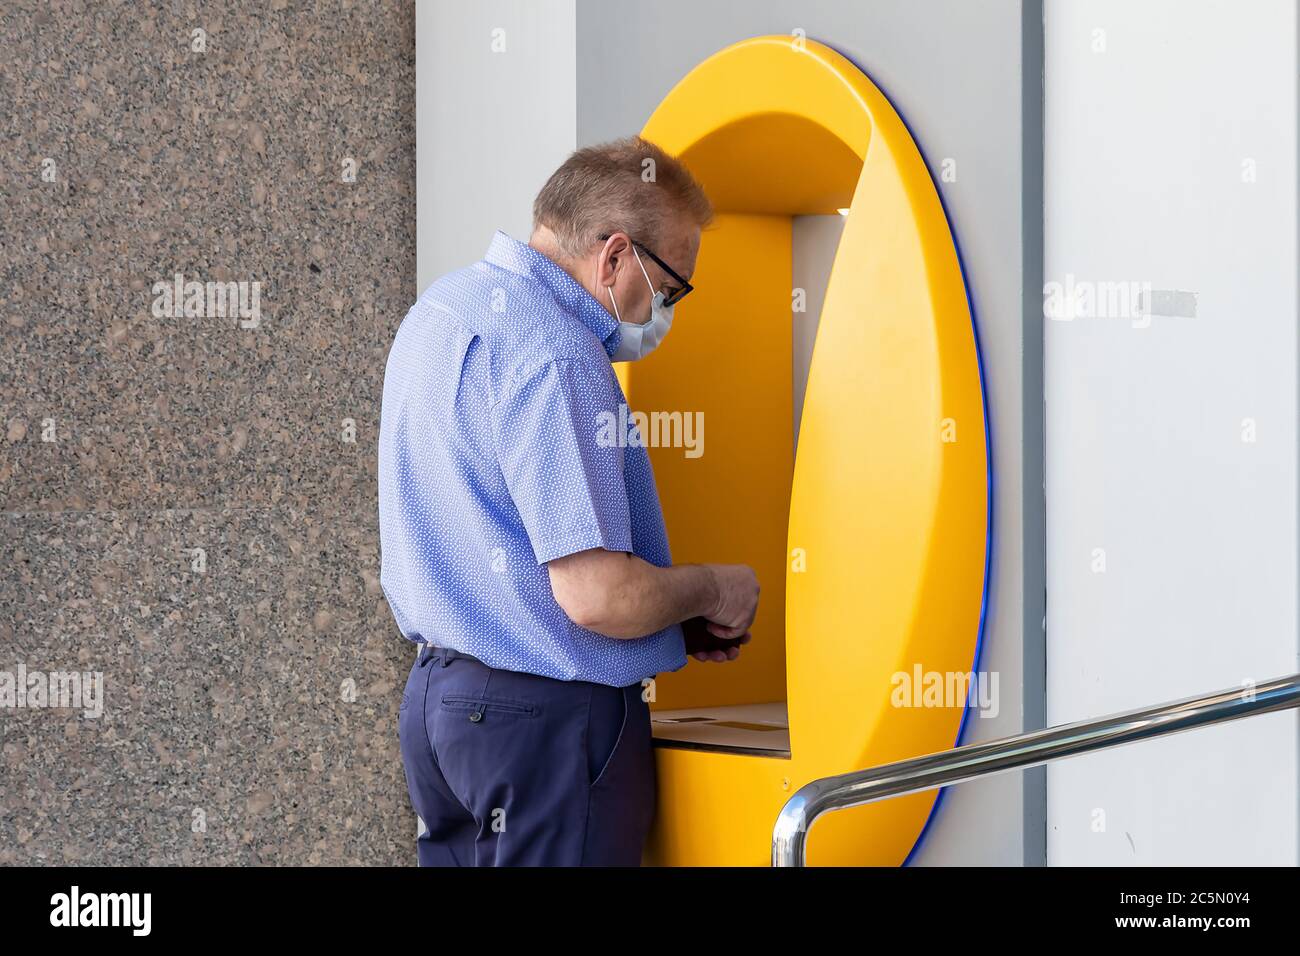 Punta Umbria, Huelva, Spain - June 3, 2020: Senior man using bank credit card in ATM machine is wearing a protective face mask due to covid-19 coronav Stock Photo